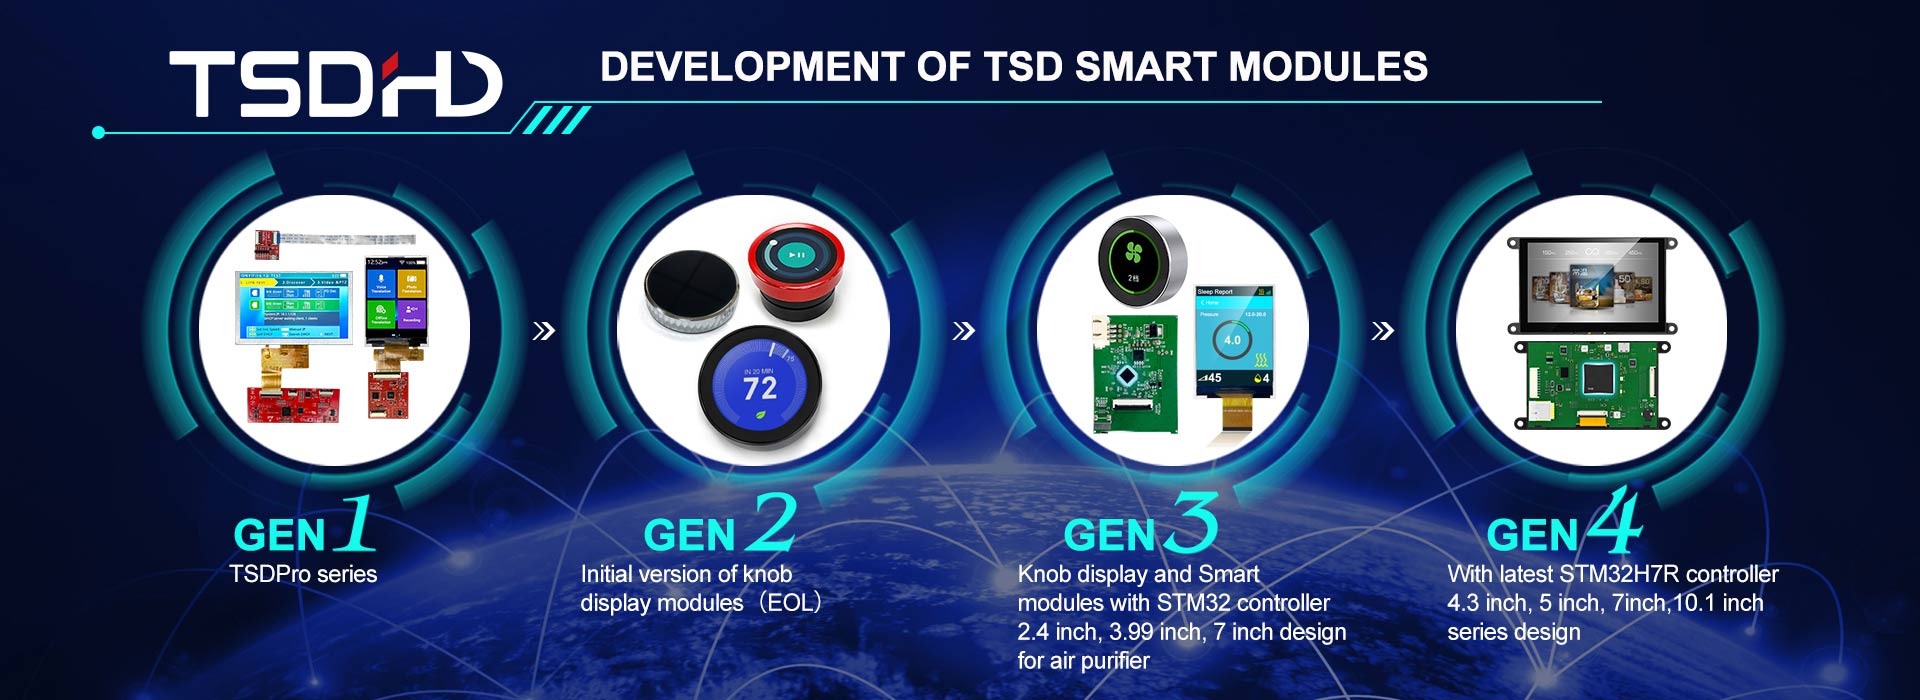 Entwicklungspfad der TSD Smart Modules